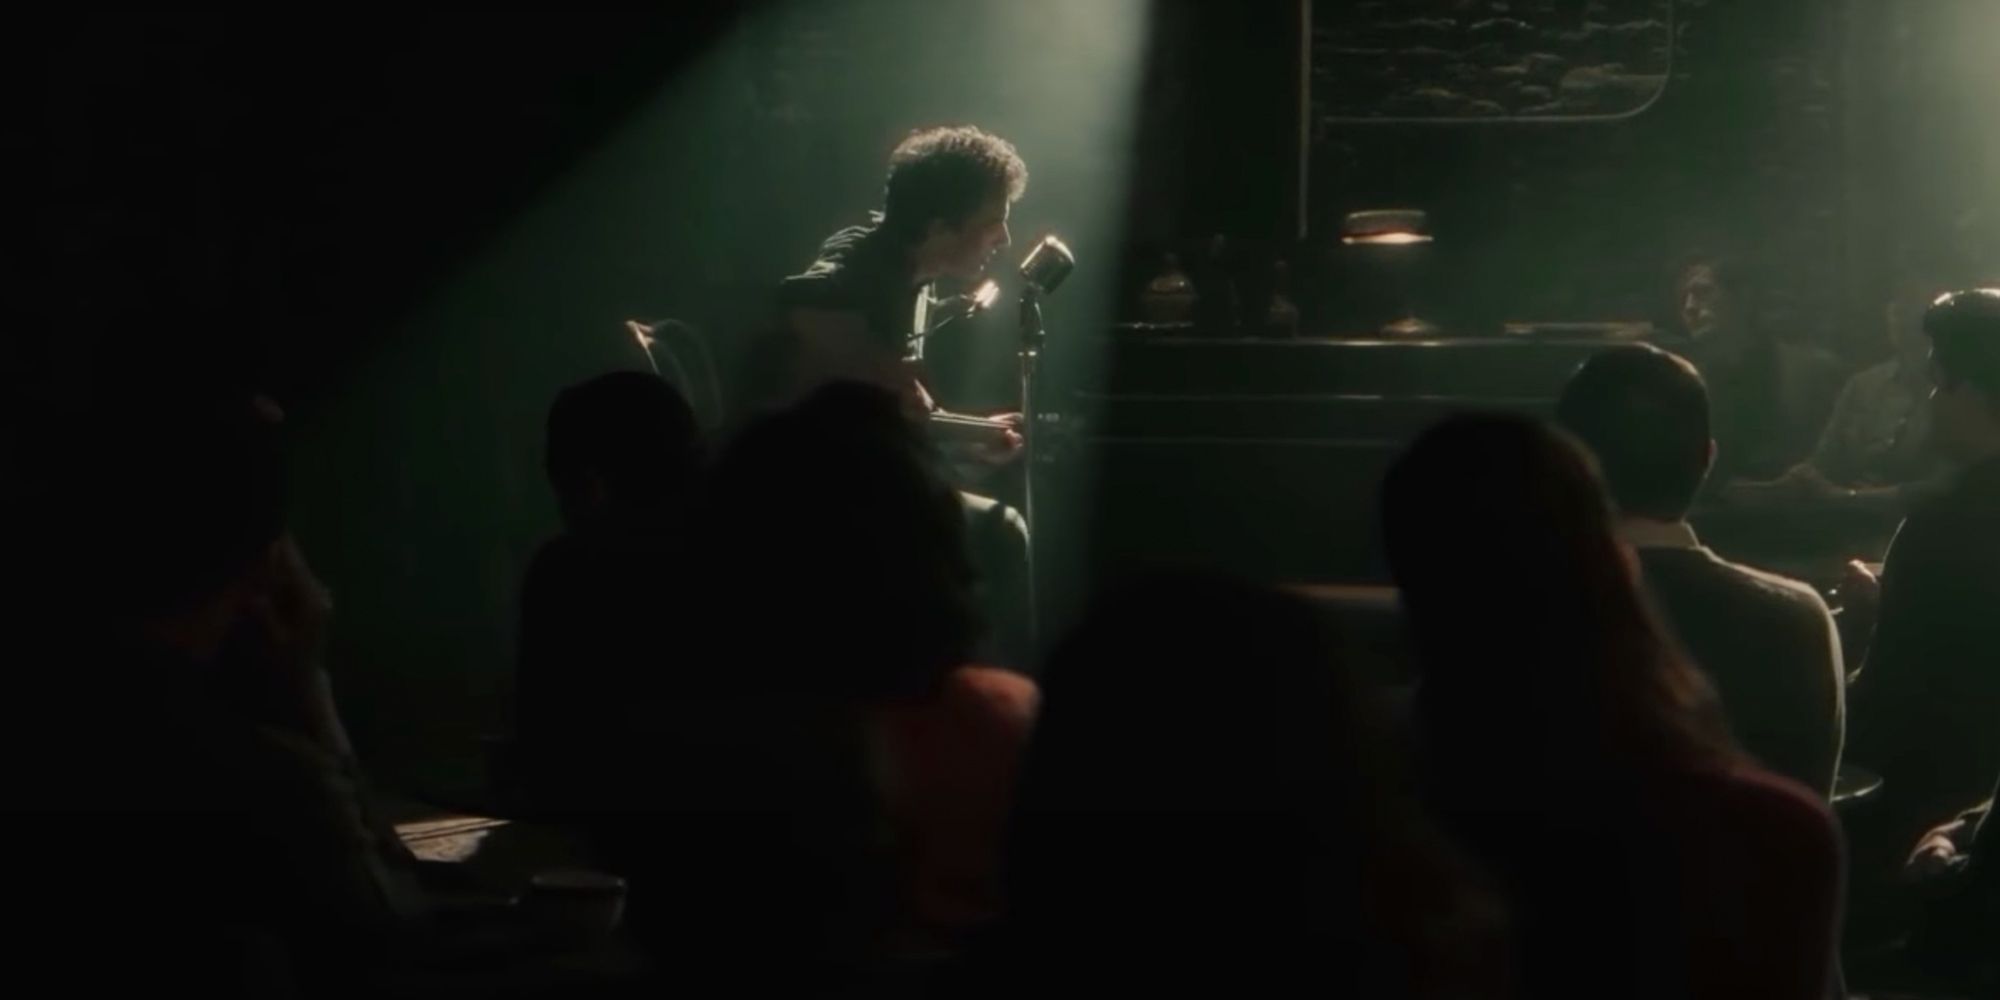 Bob Dylan sings on-stage at the Gaslight Cafe in Inside Llewyn Davis